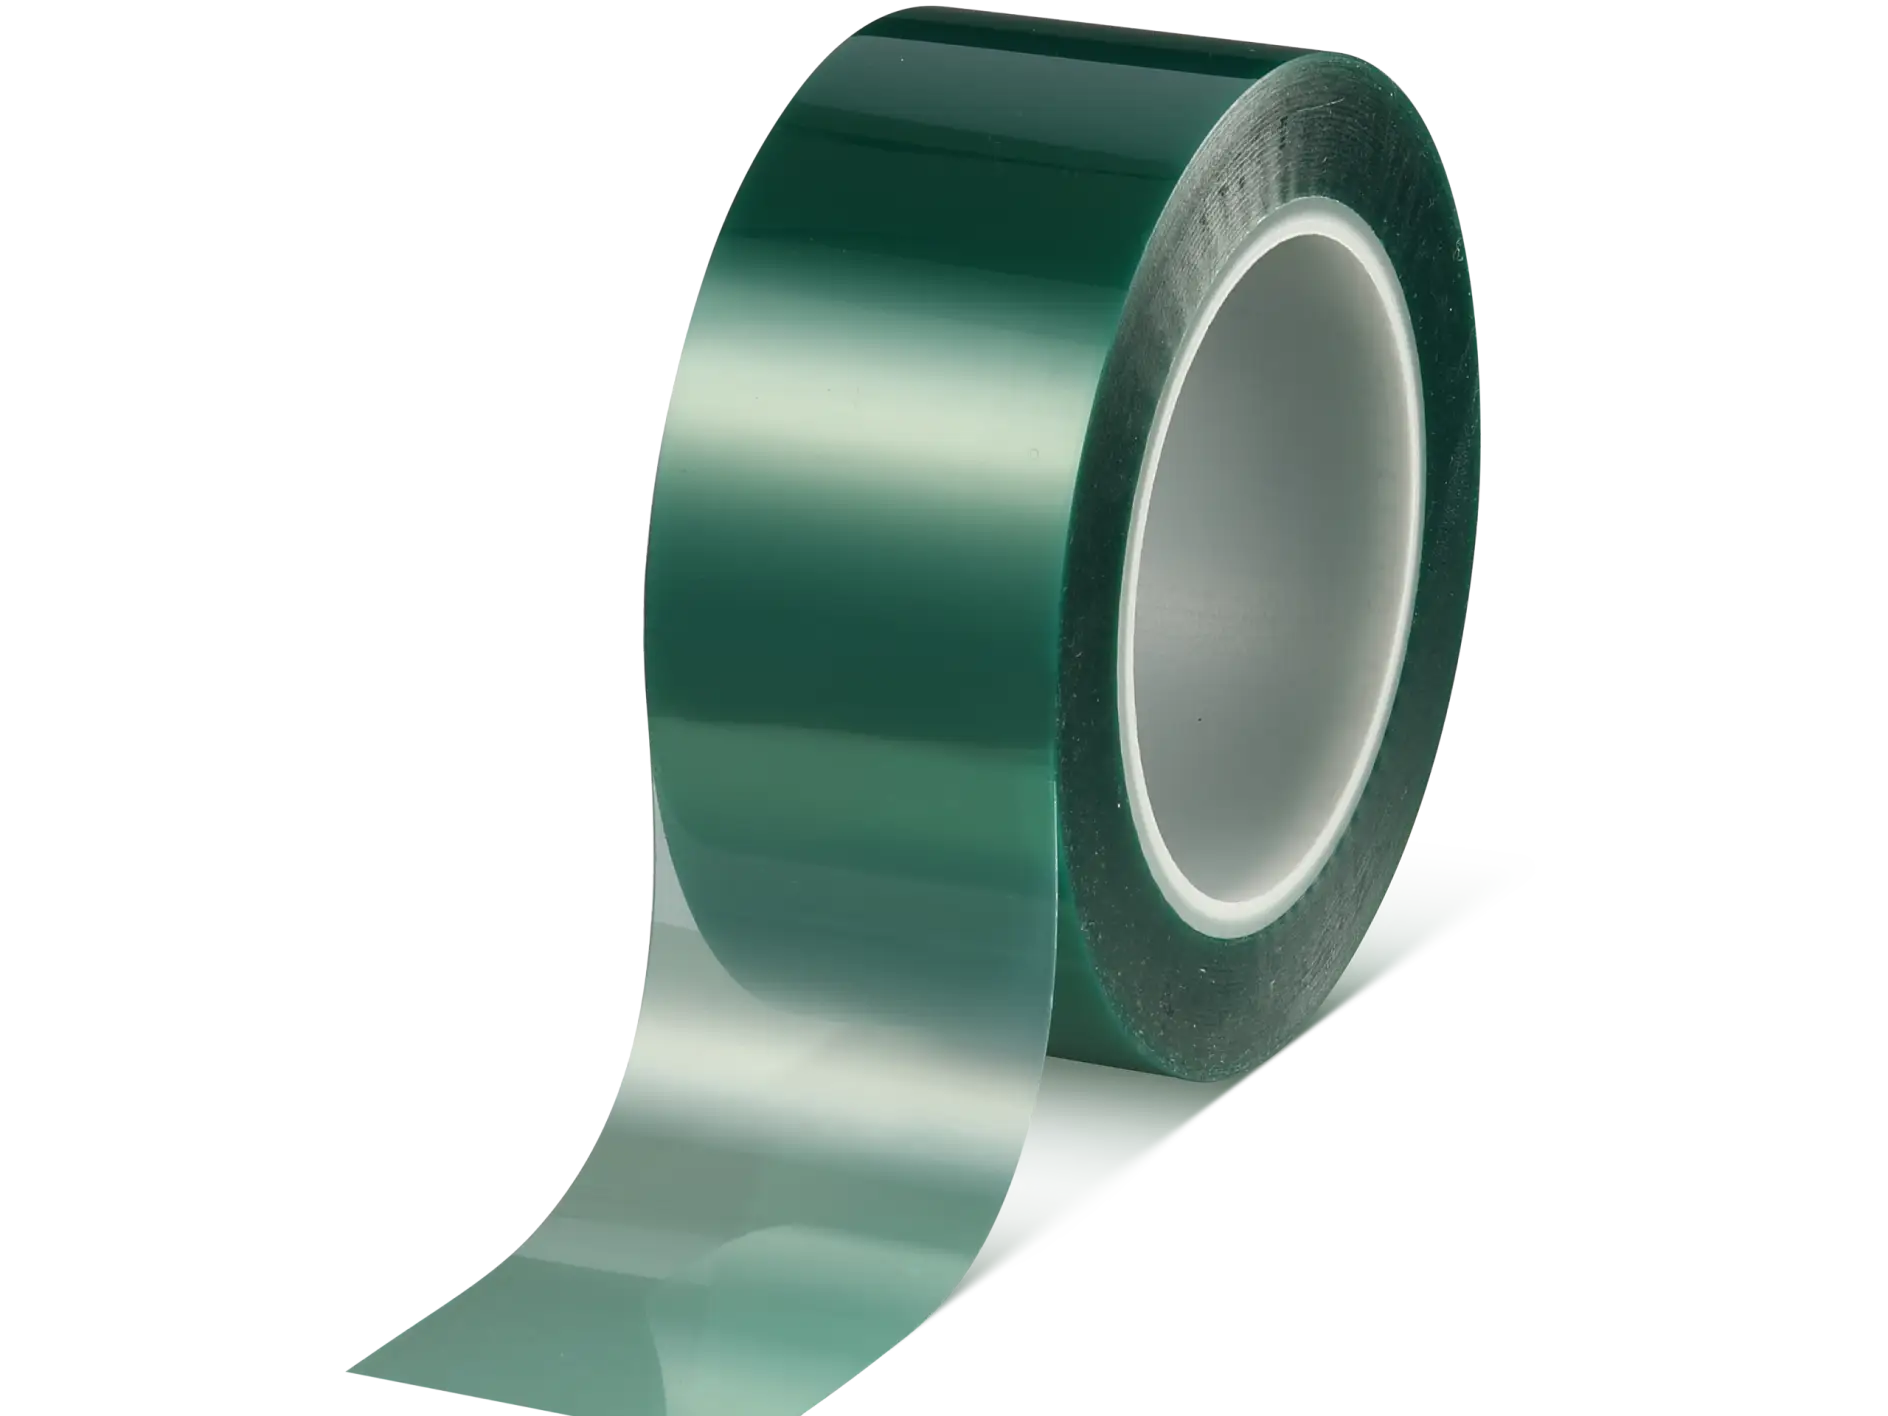 tesa-50600-polyester-silicone-masking-tape-green-translucent-506000000100-pr-cms